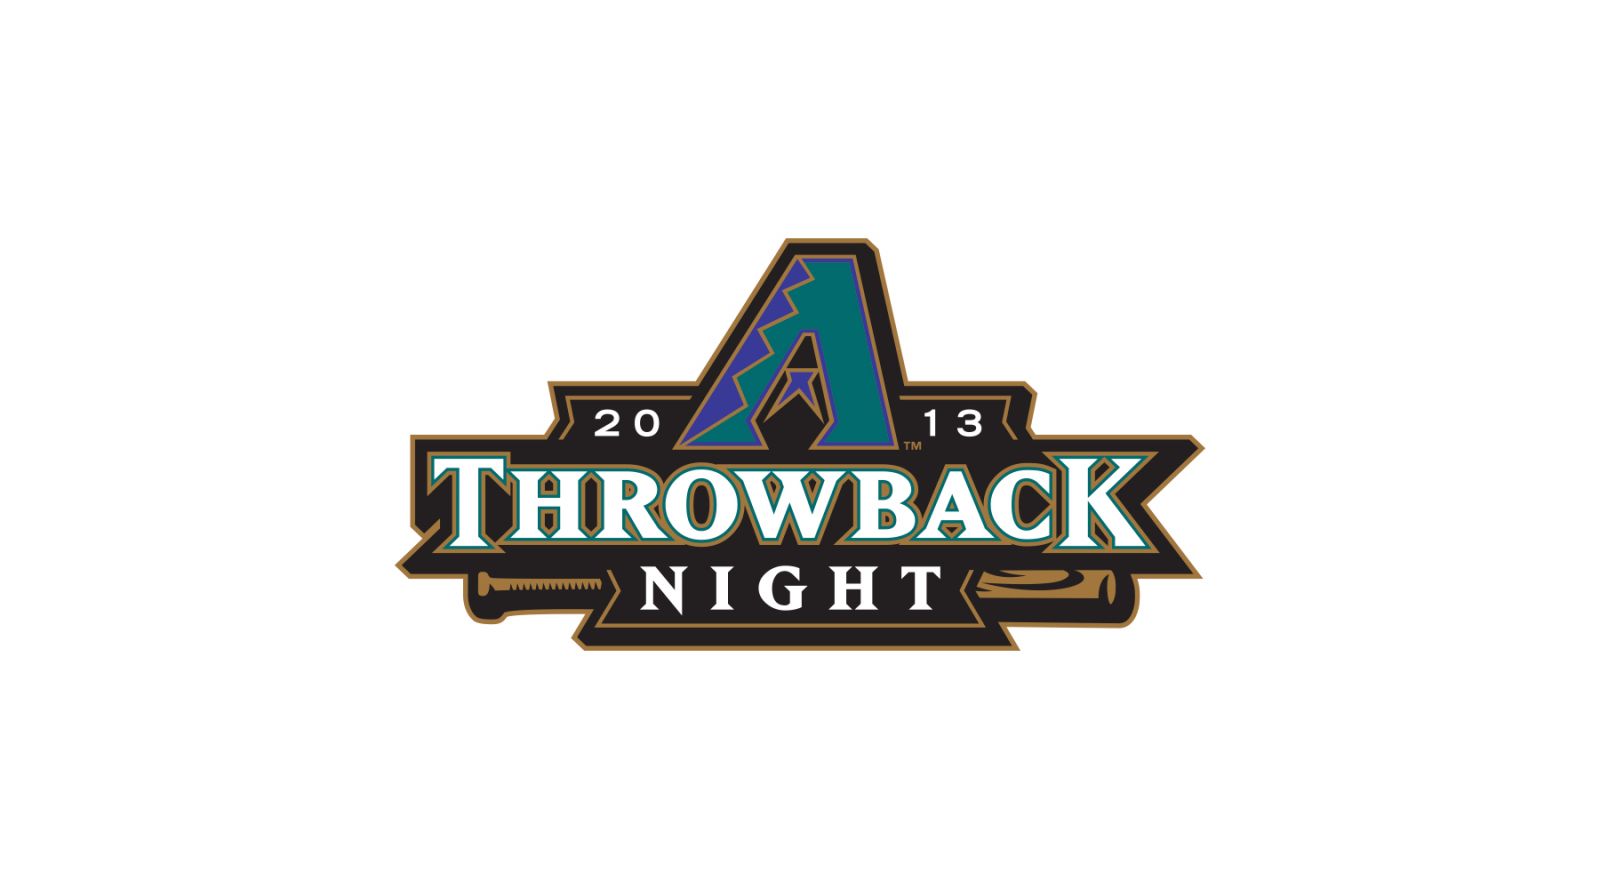 Arizona Diamondbacks 2013 Throwback night logo by Brian Gundell